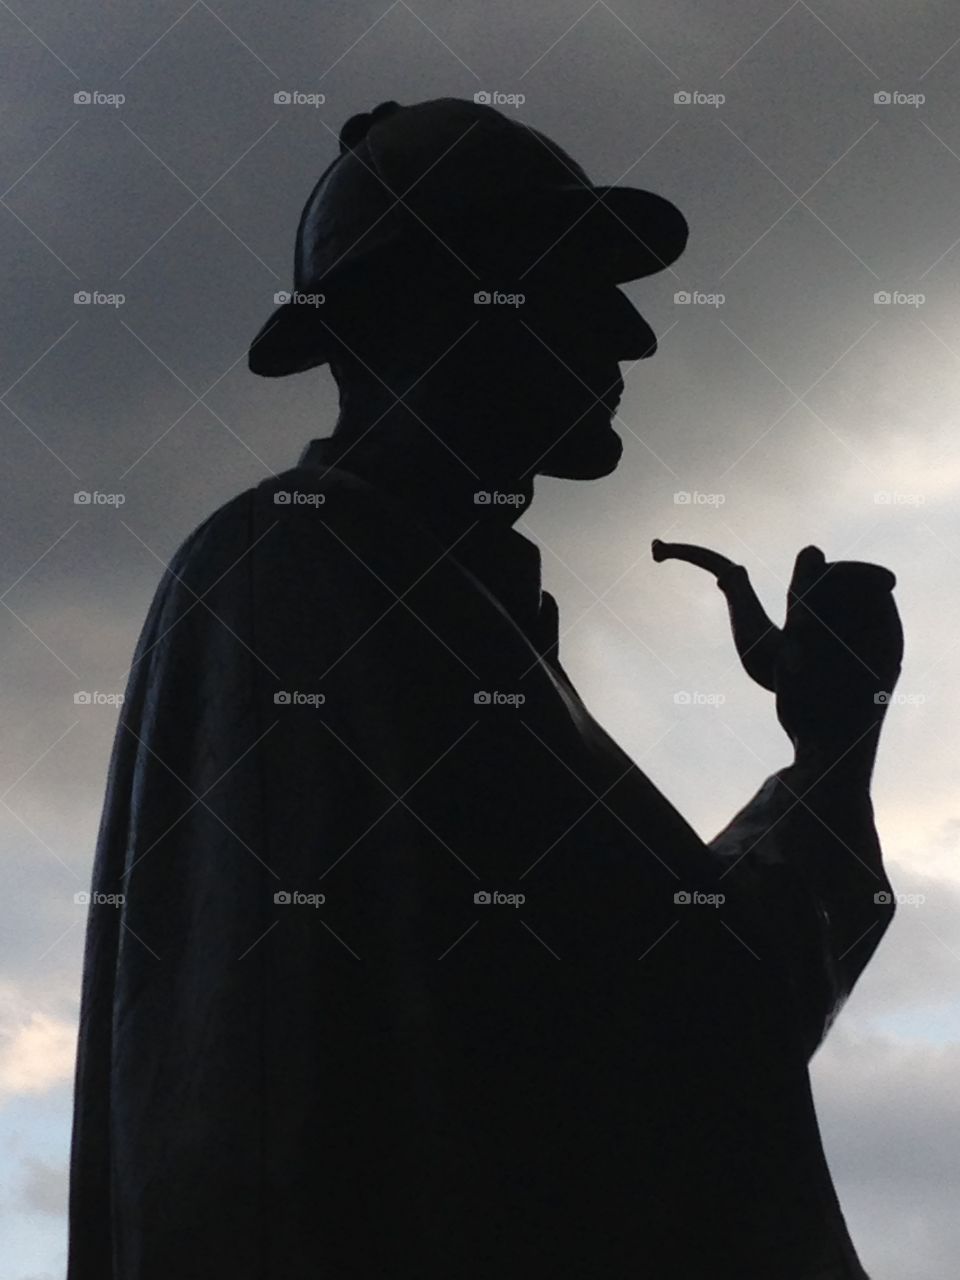 Silhouette of Sherlock Holmes statue against sky 